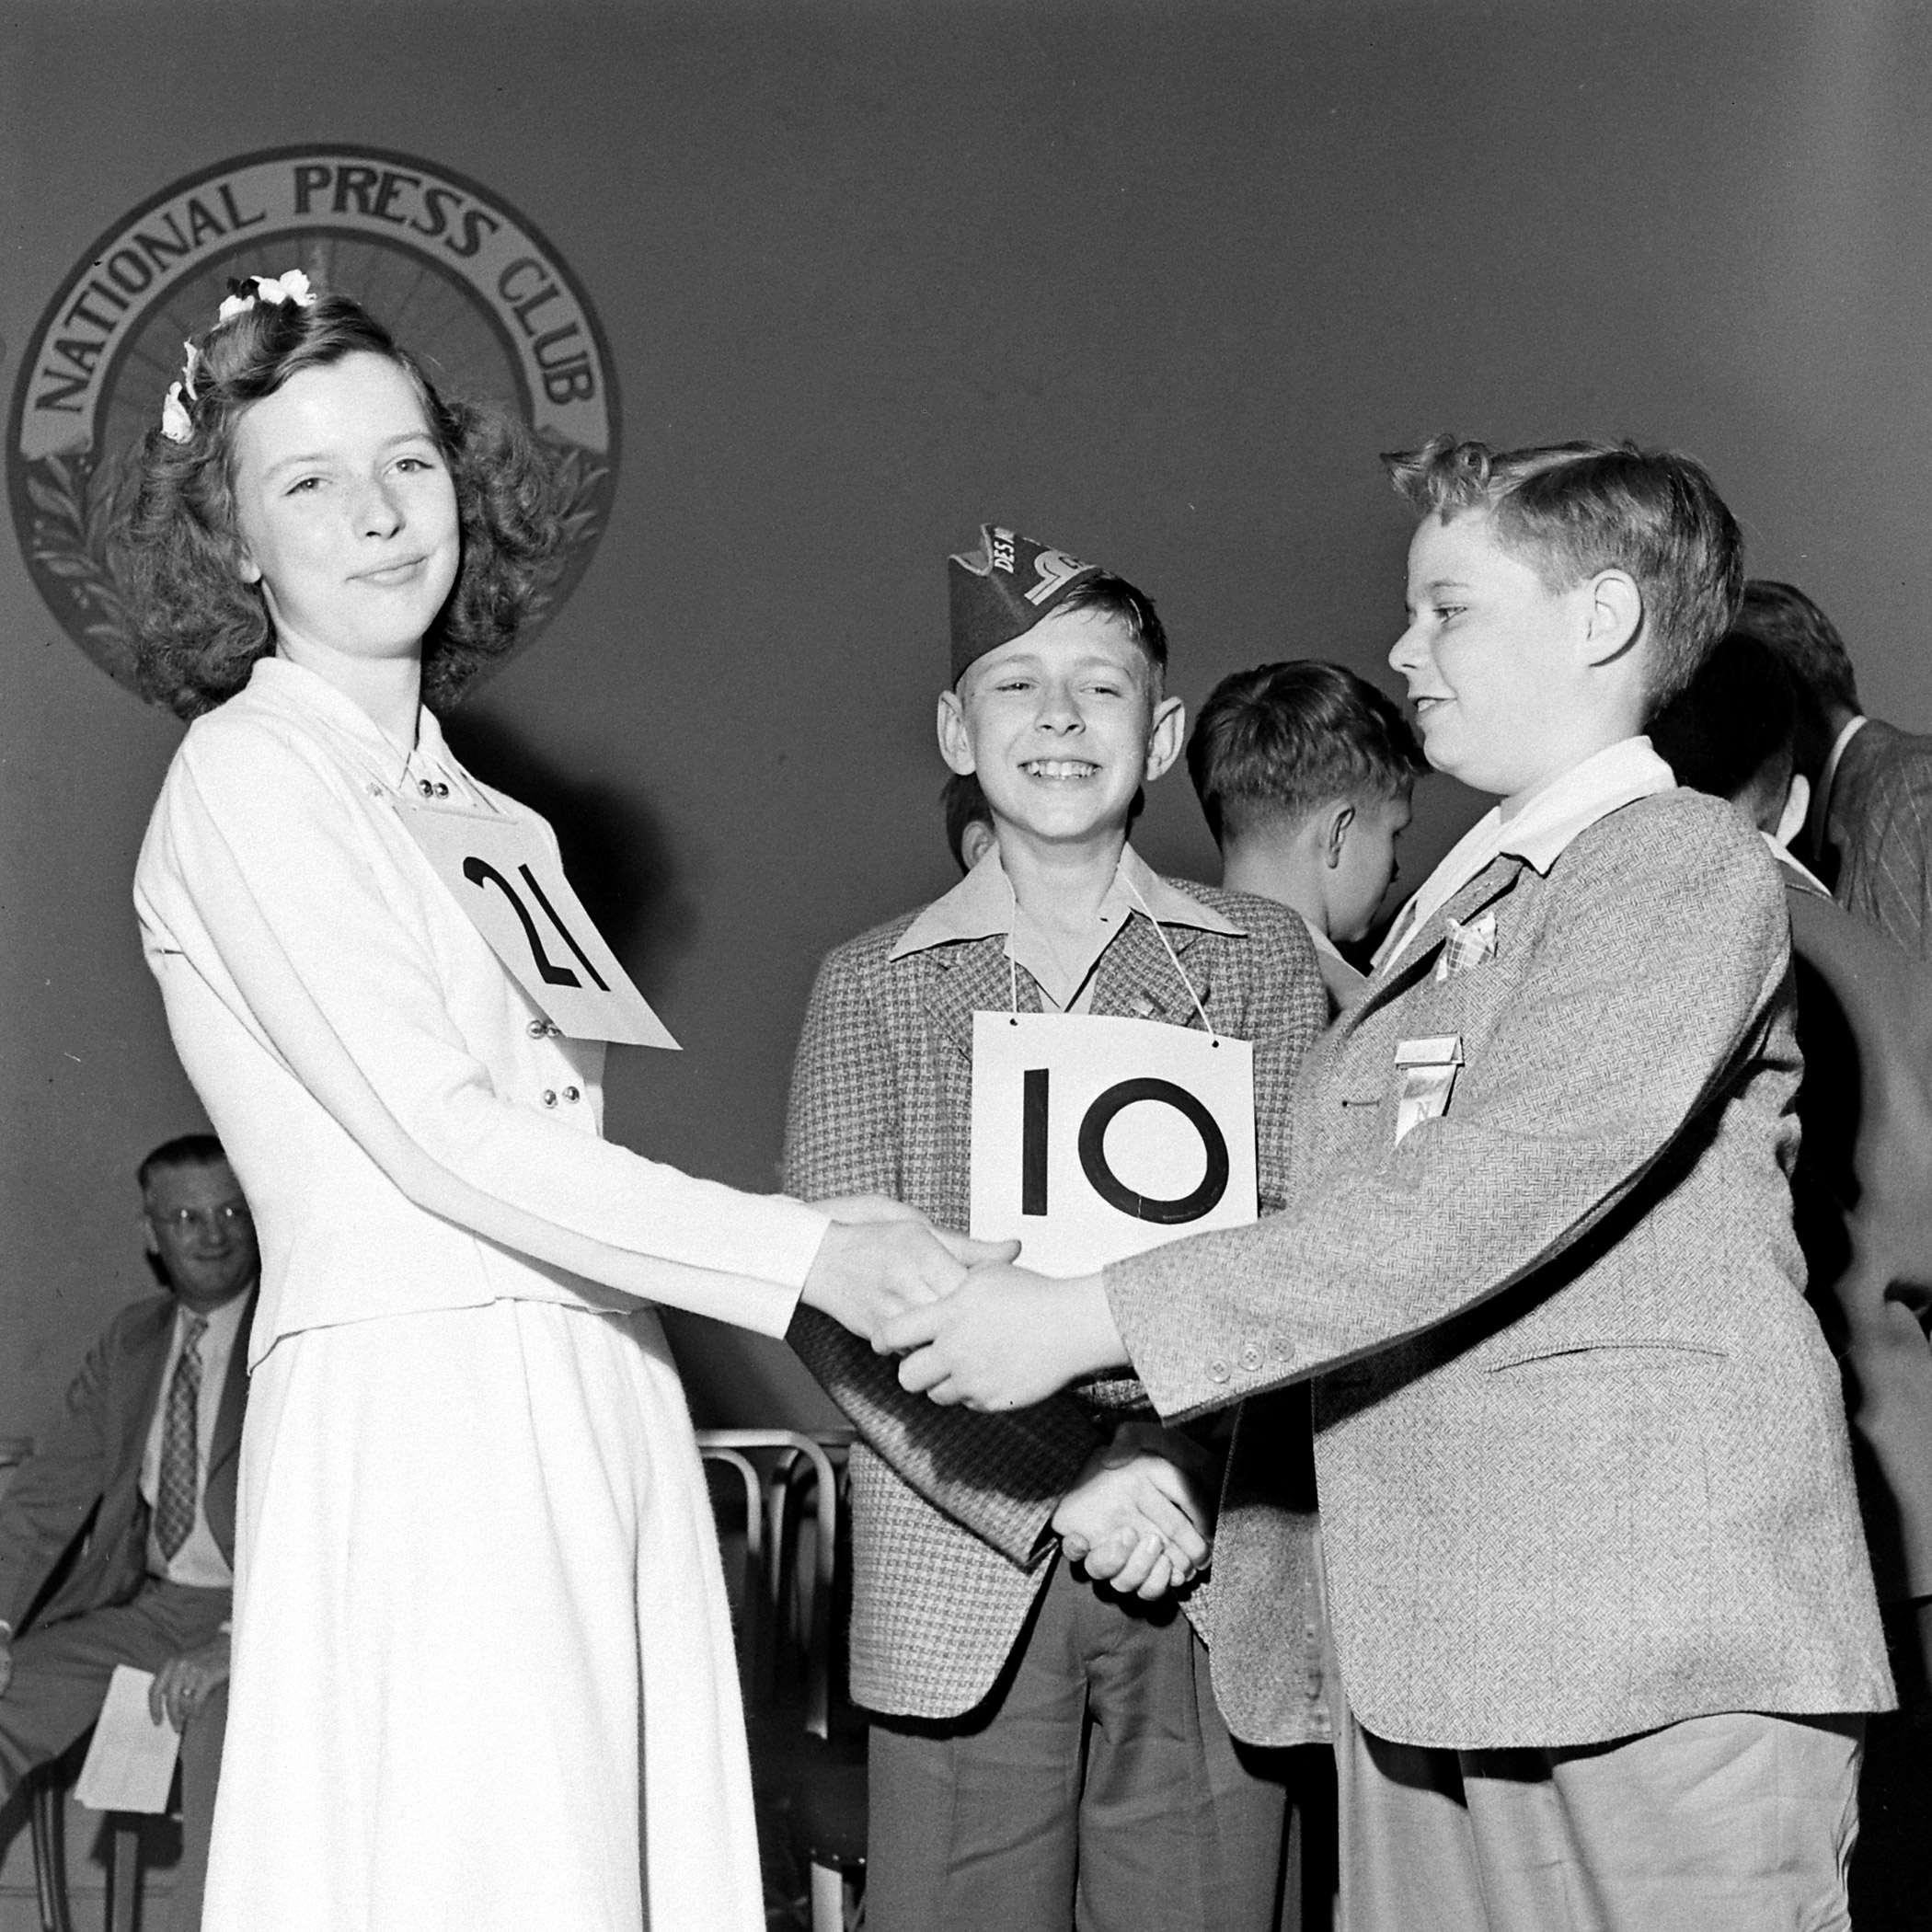 National Spelling Bee 1946